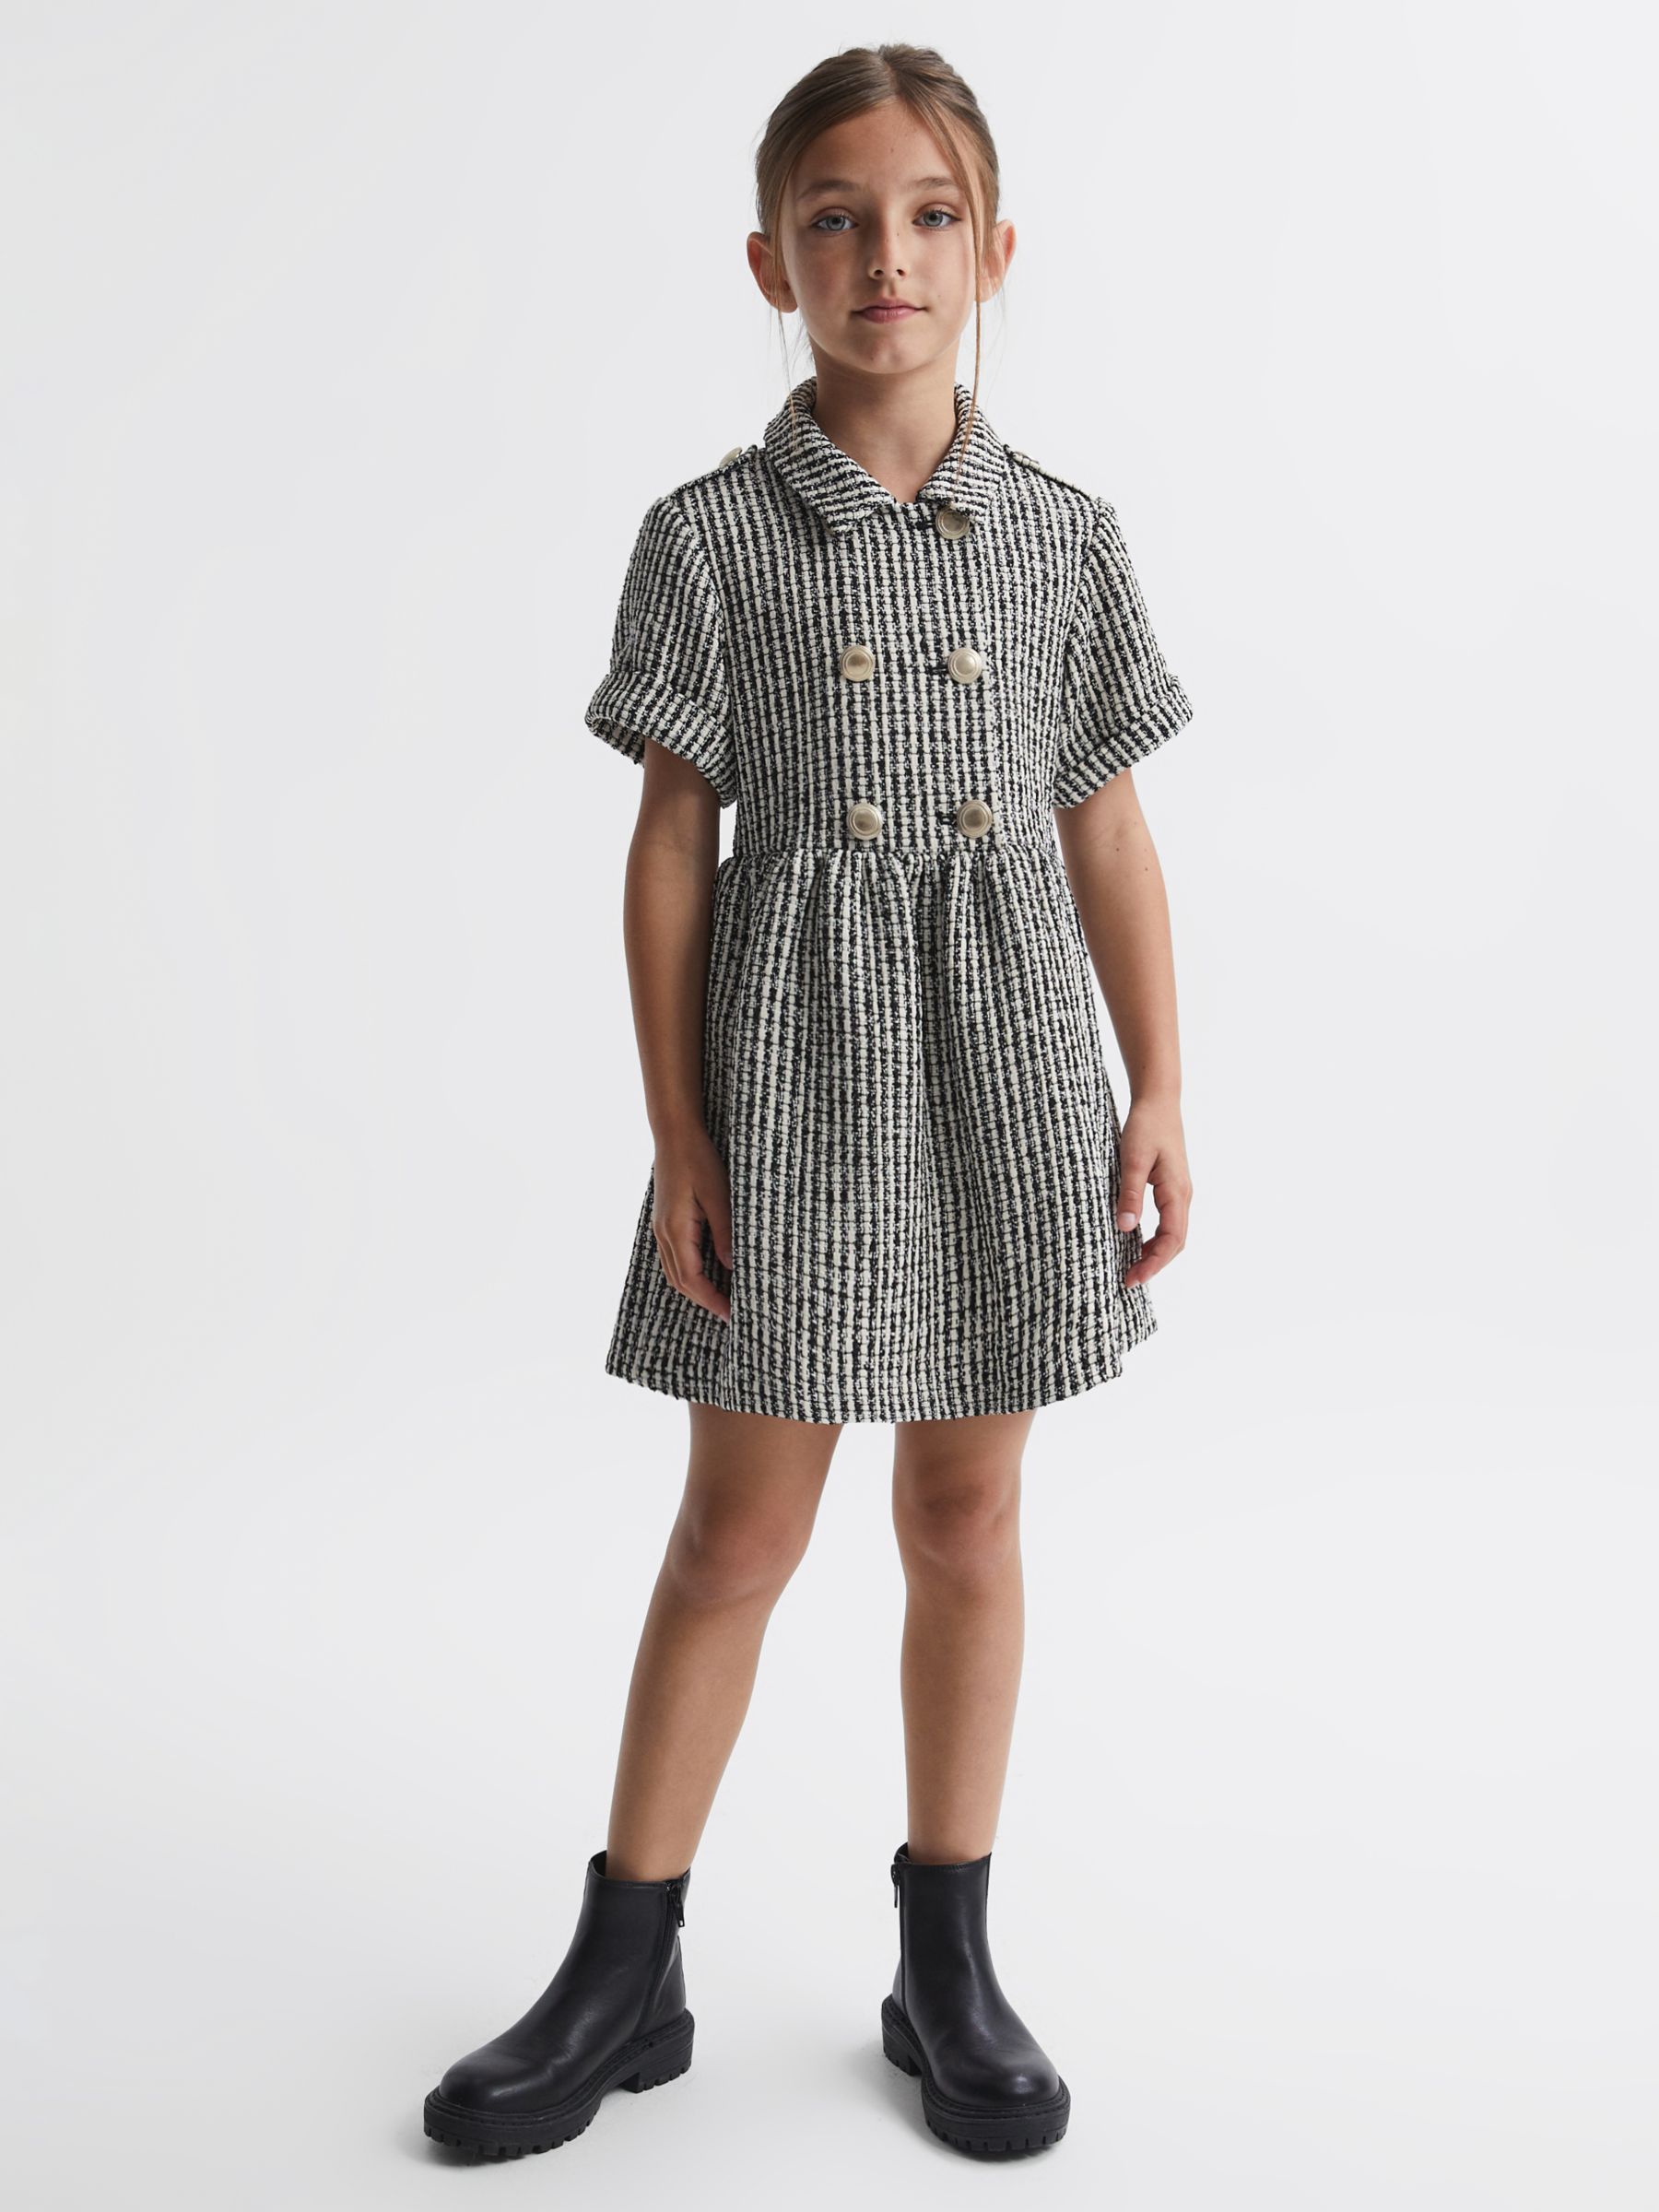 Reiss Kids' Junip Tweed Button Up Dress, Multi, 8-9 years